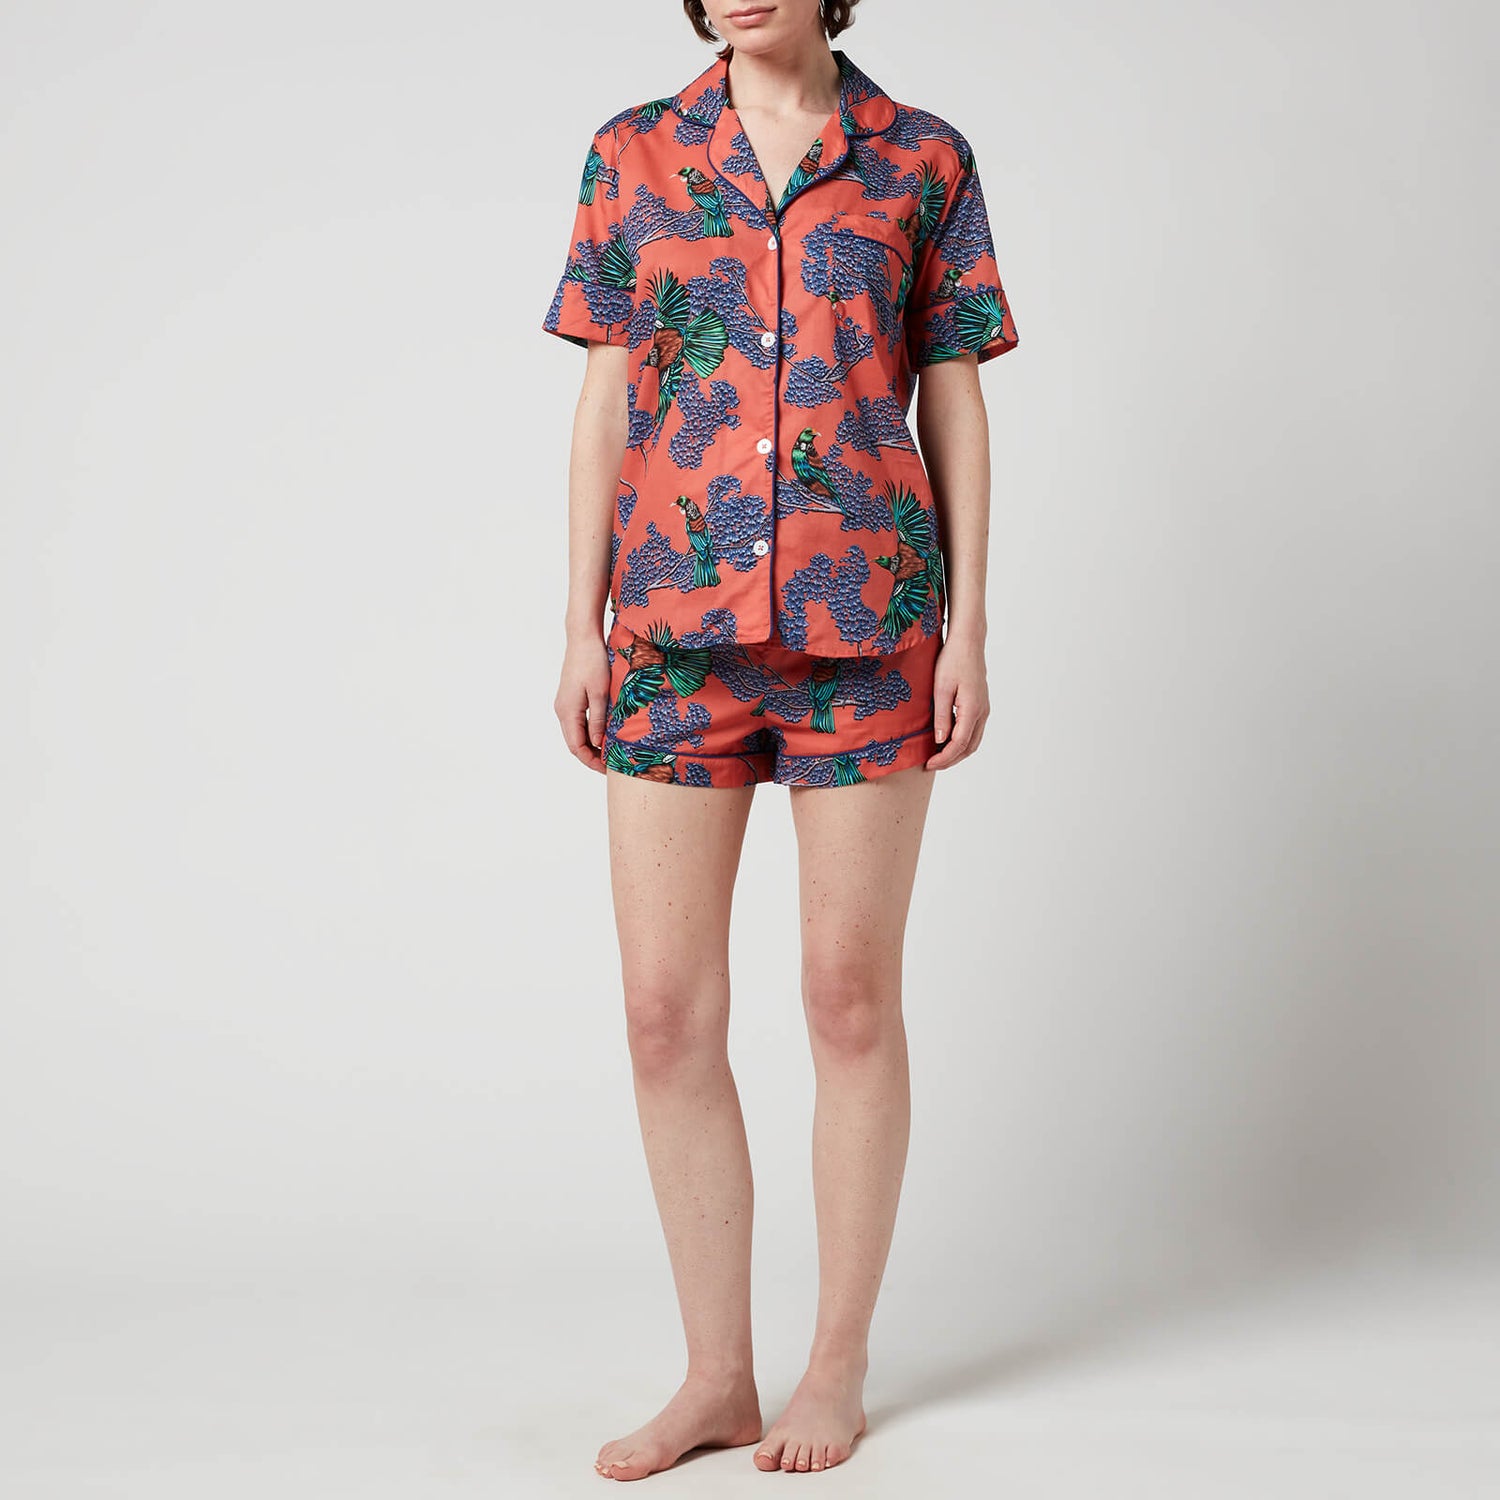 Desmond & Dempsey Women's Passerine Short Sleeve Pyjama Set - Coral - S